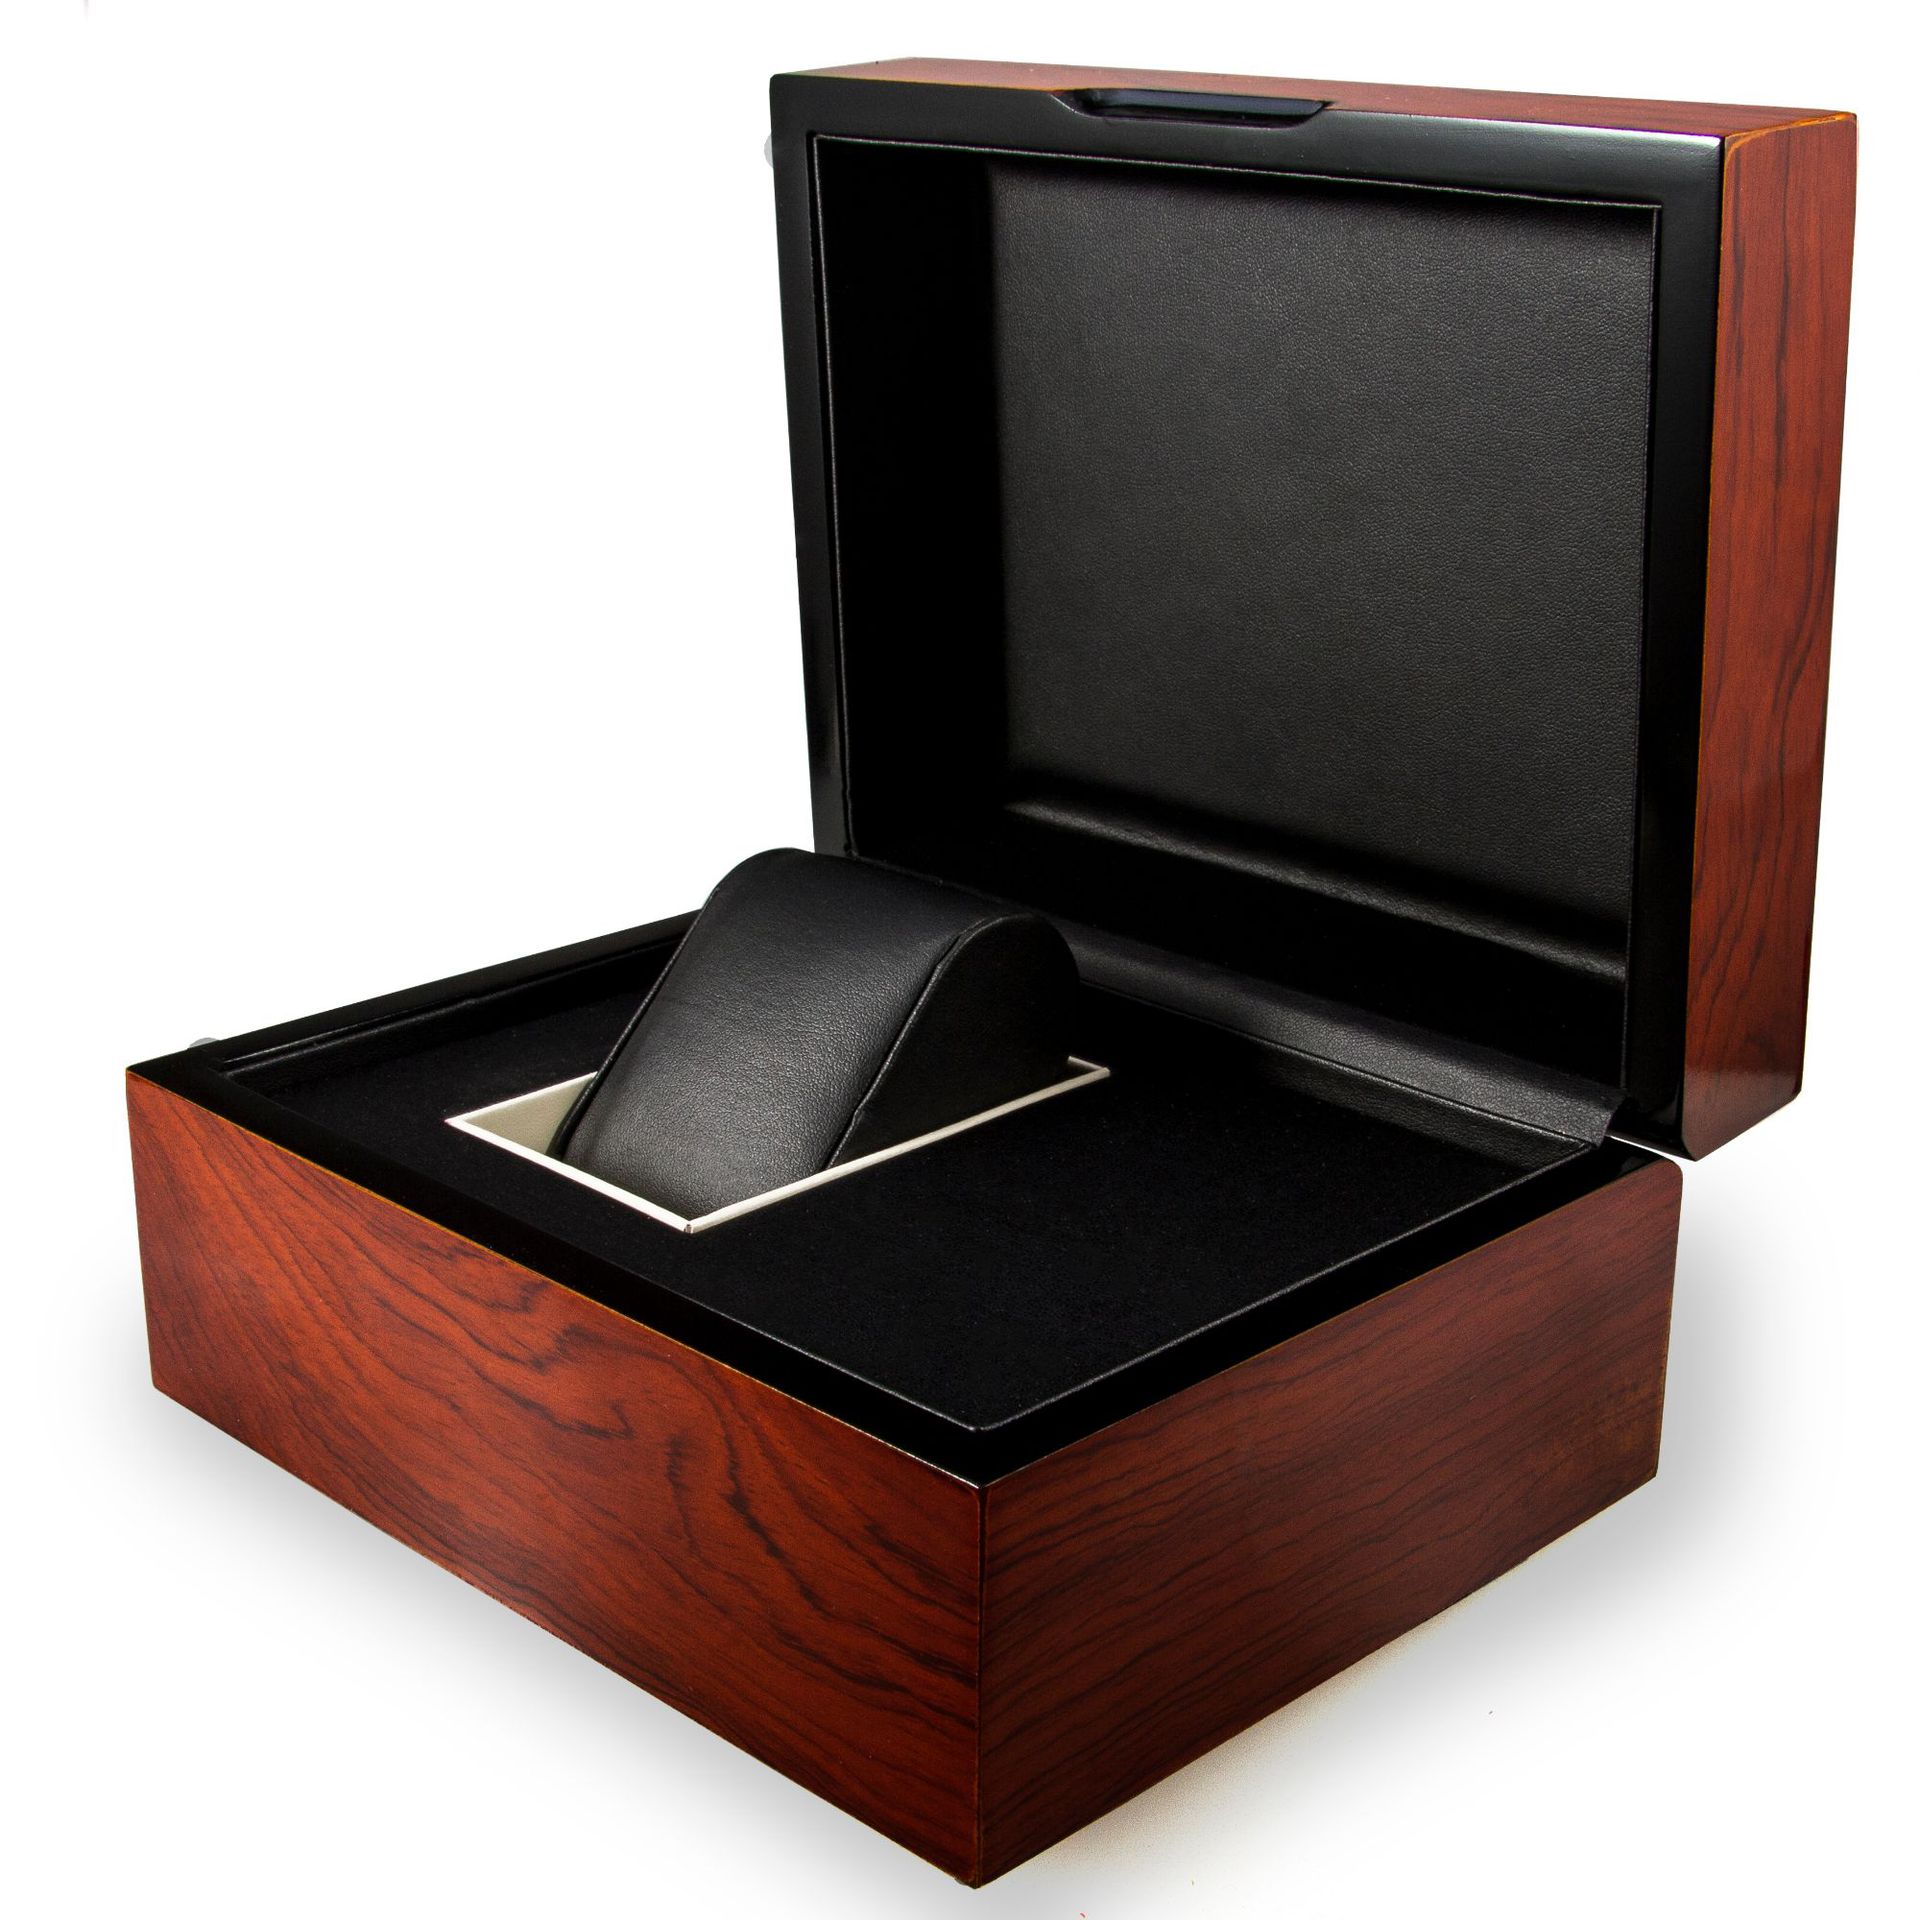 Custom watch box manufacturer - Aigell Watch is a professional watch manufacturer